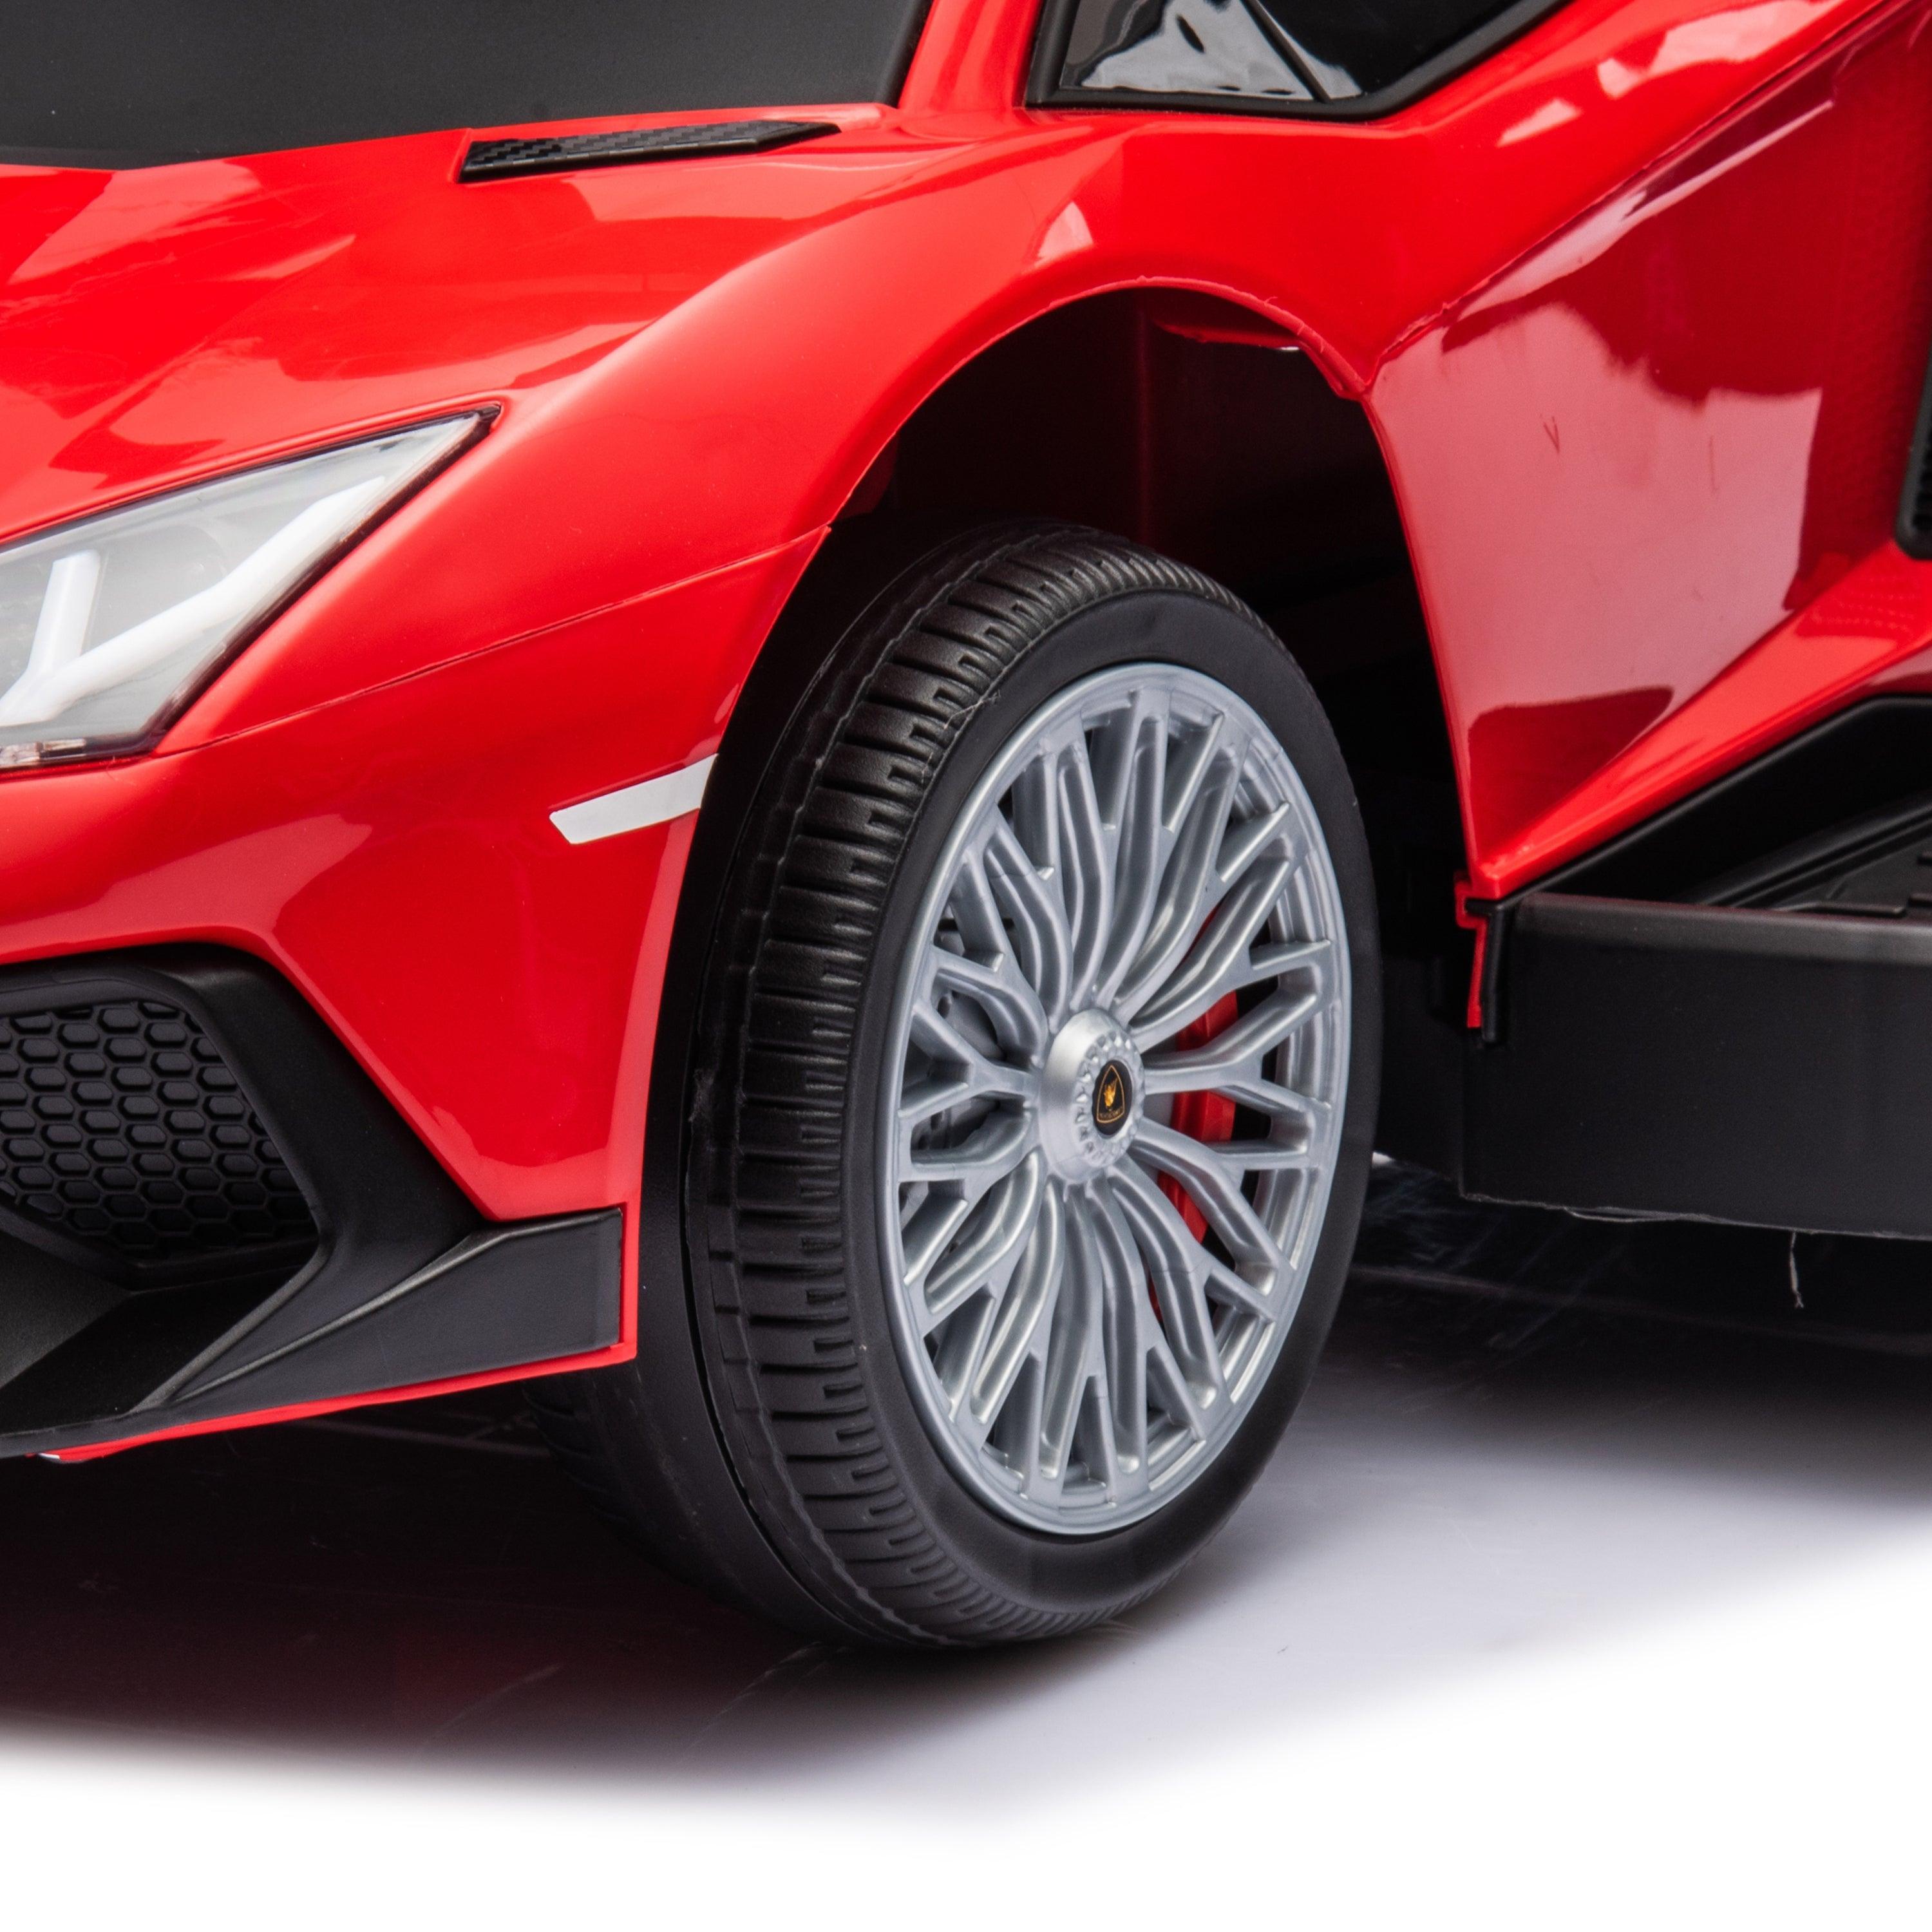 Lamborghini 3-in-1 Kids Push Ride On Toy Car - DTI Direct USA